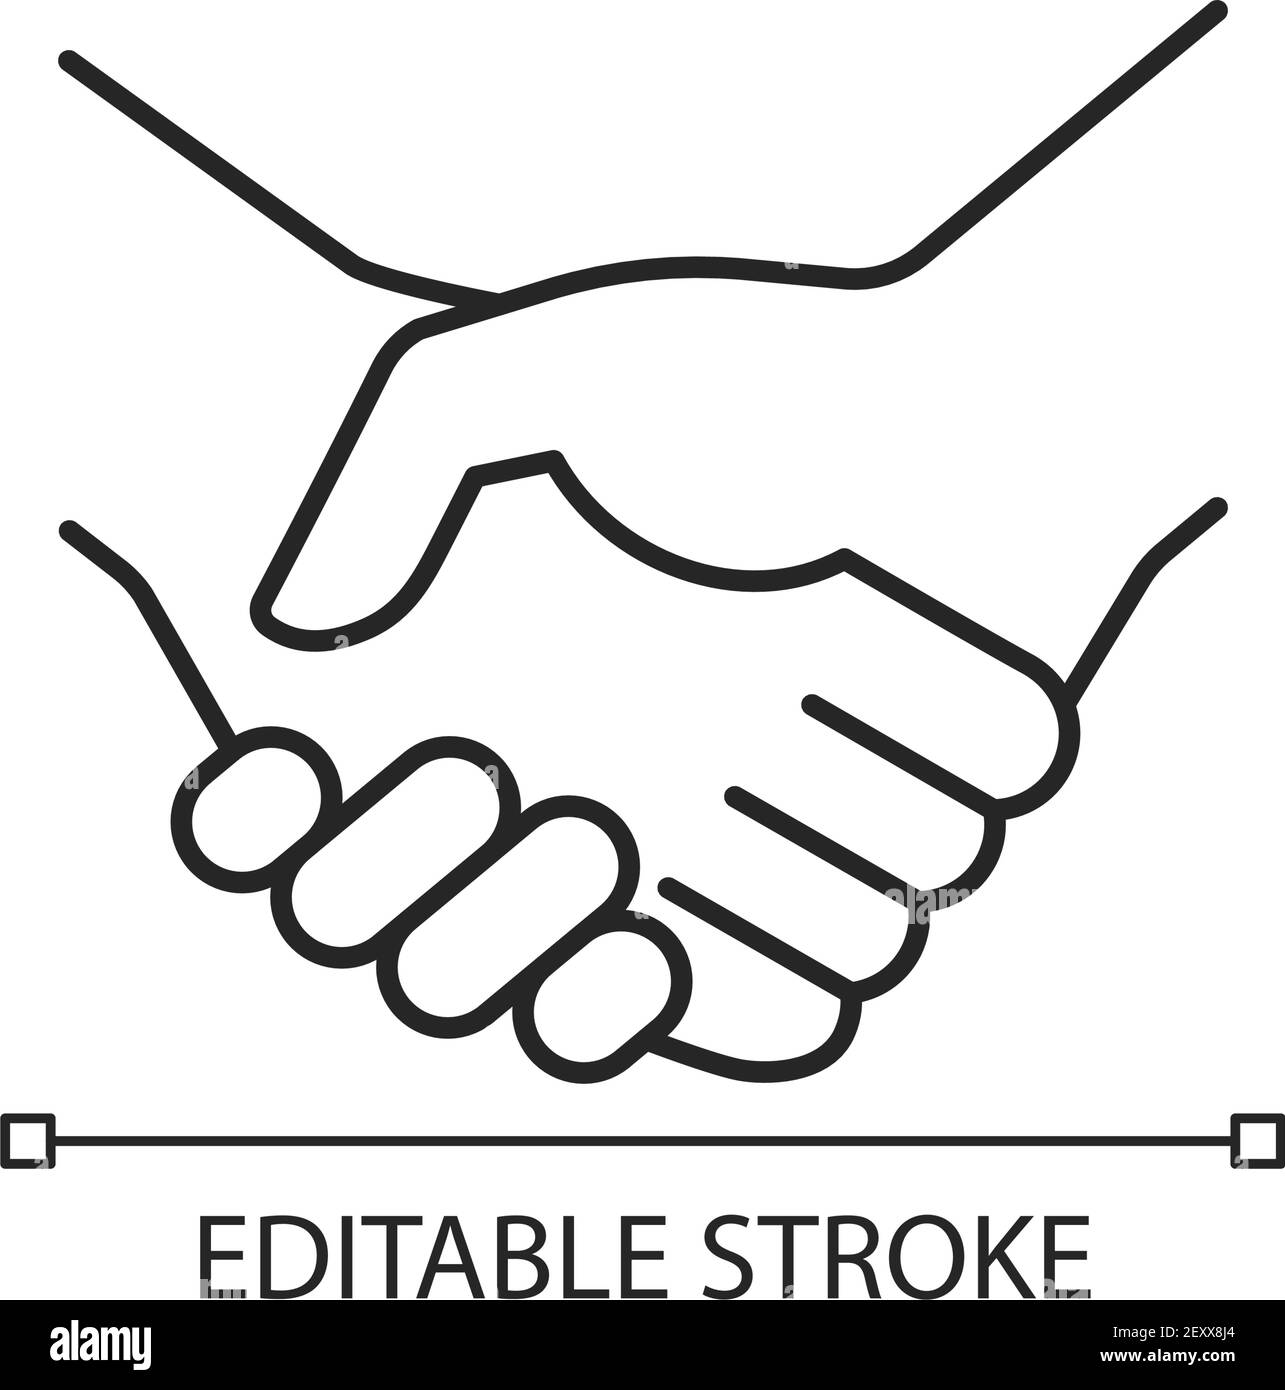 Handshake Gesture Linear Icon. Thin Line Illustration. Shaking